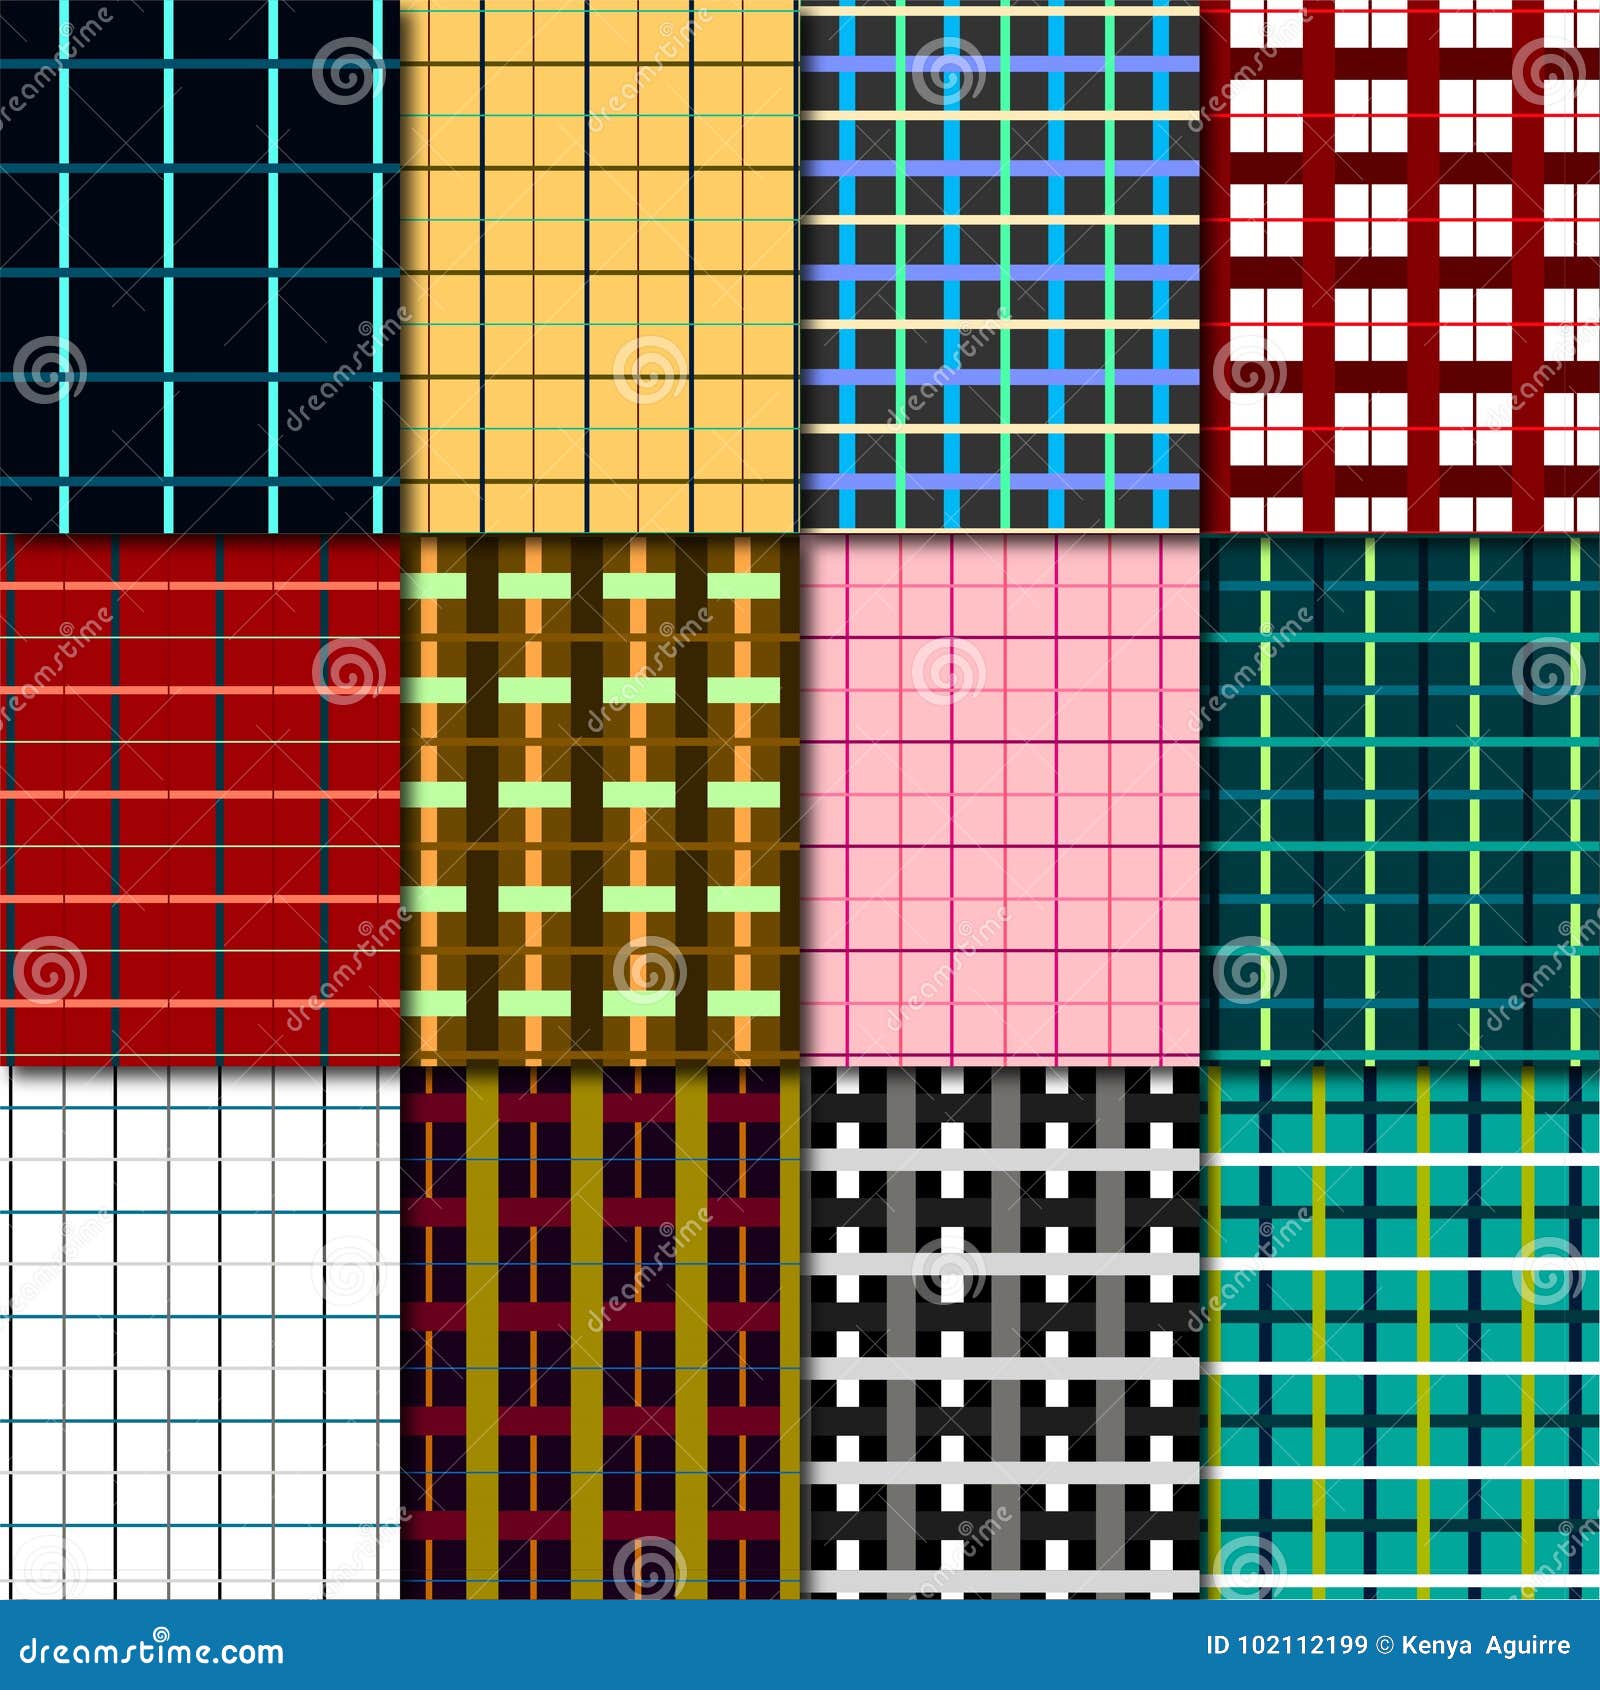 squared patterns